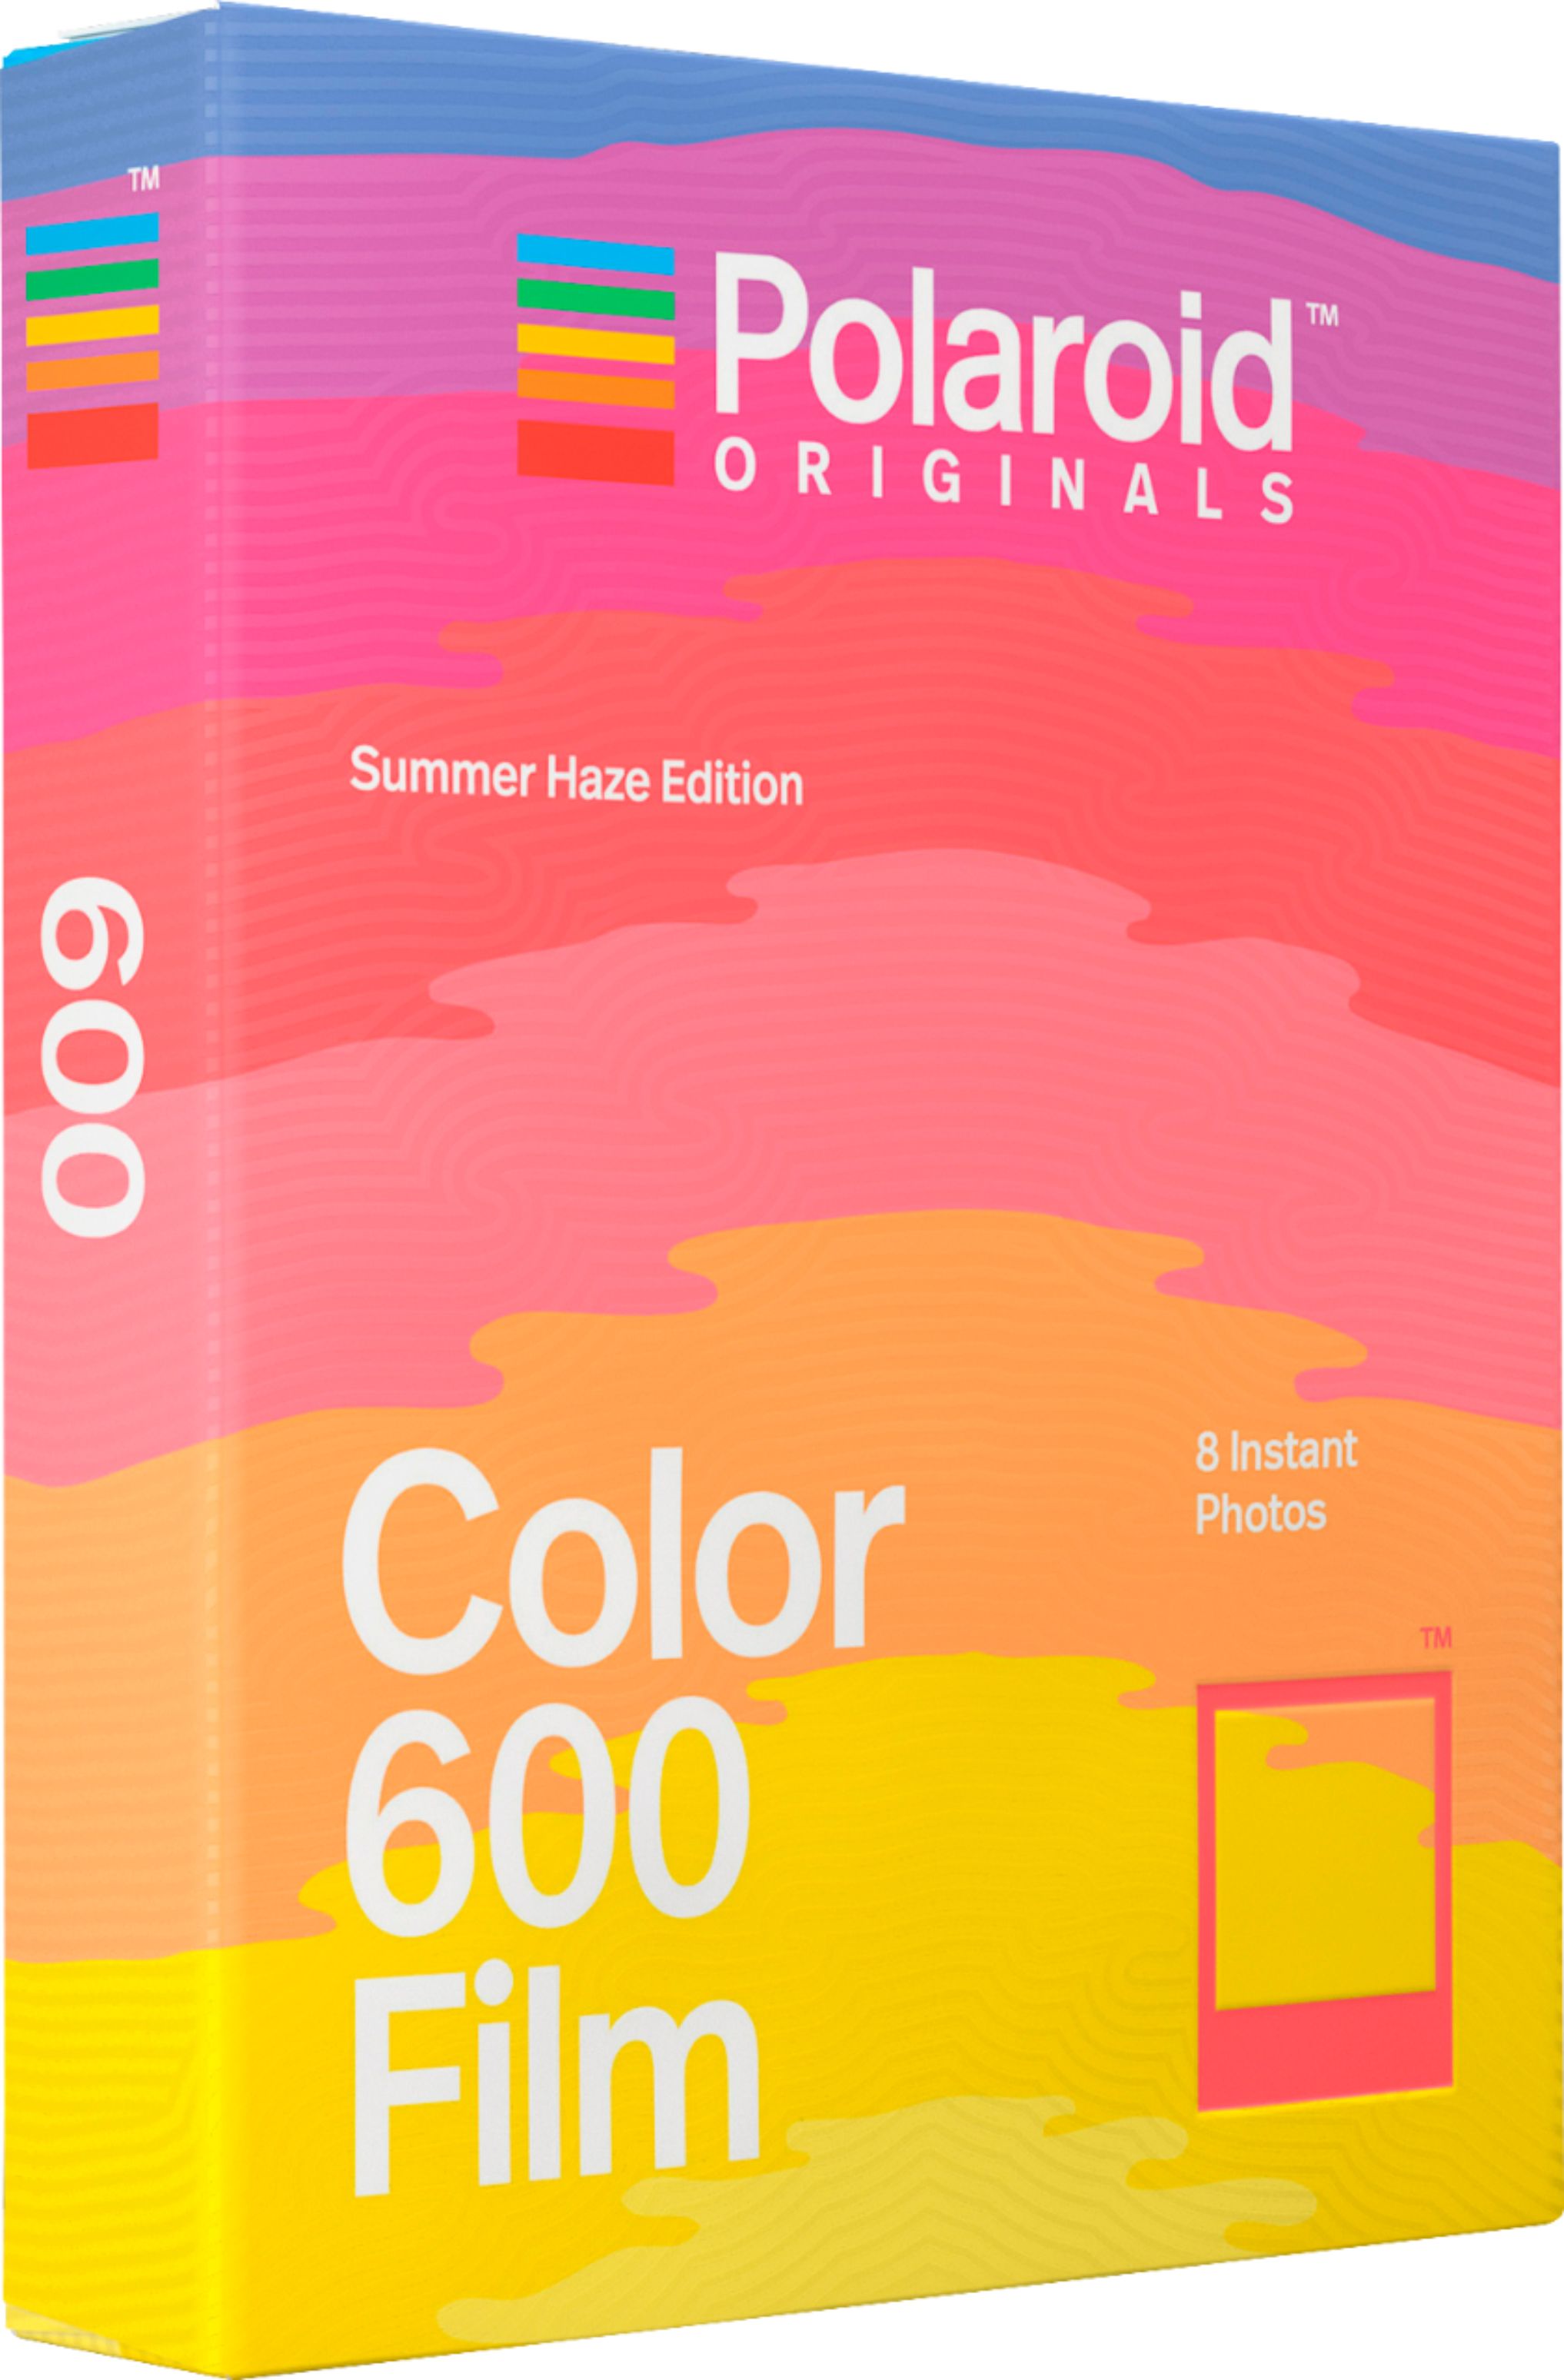 Concreet Handvol Il Best Buy: Polaroid Originals Color 600 Film Summer Haze Edition (8 Sheets)  4928